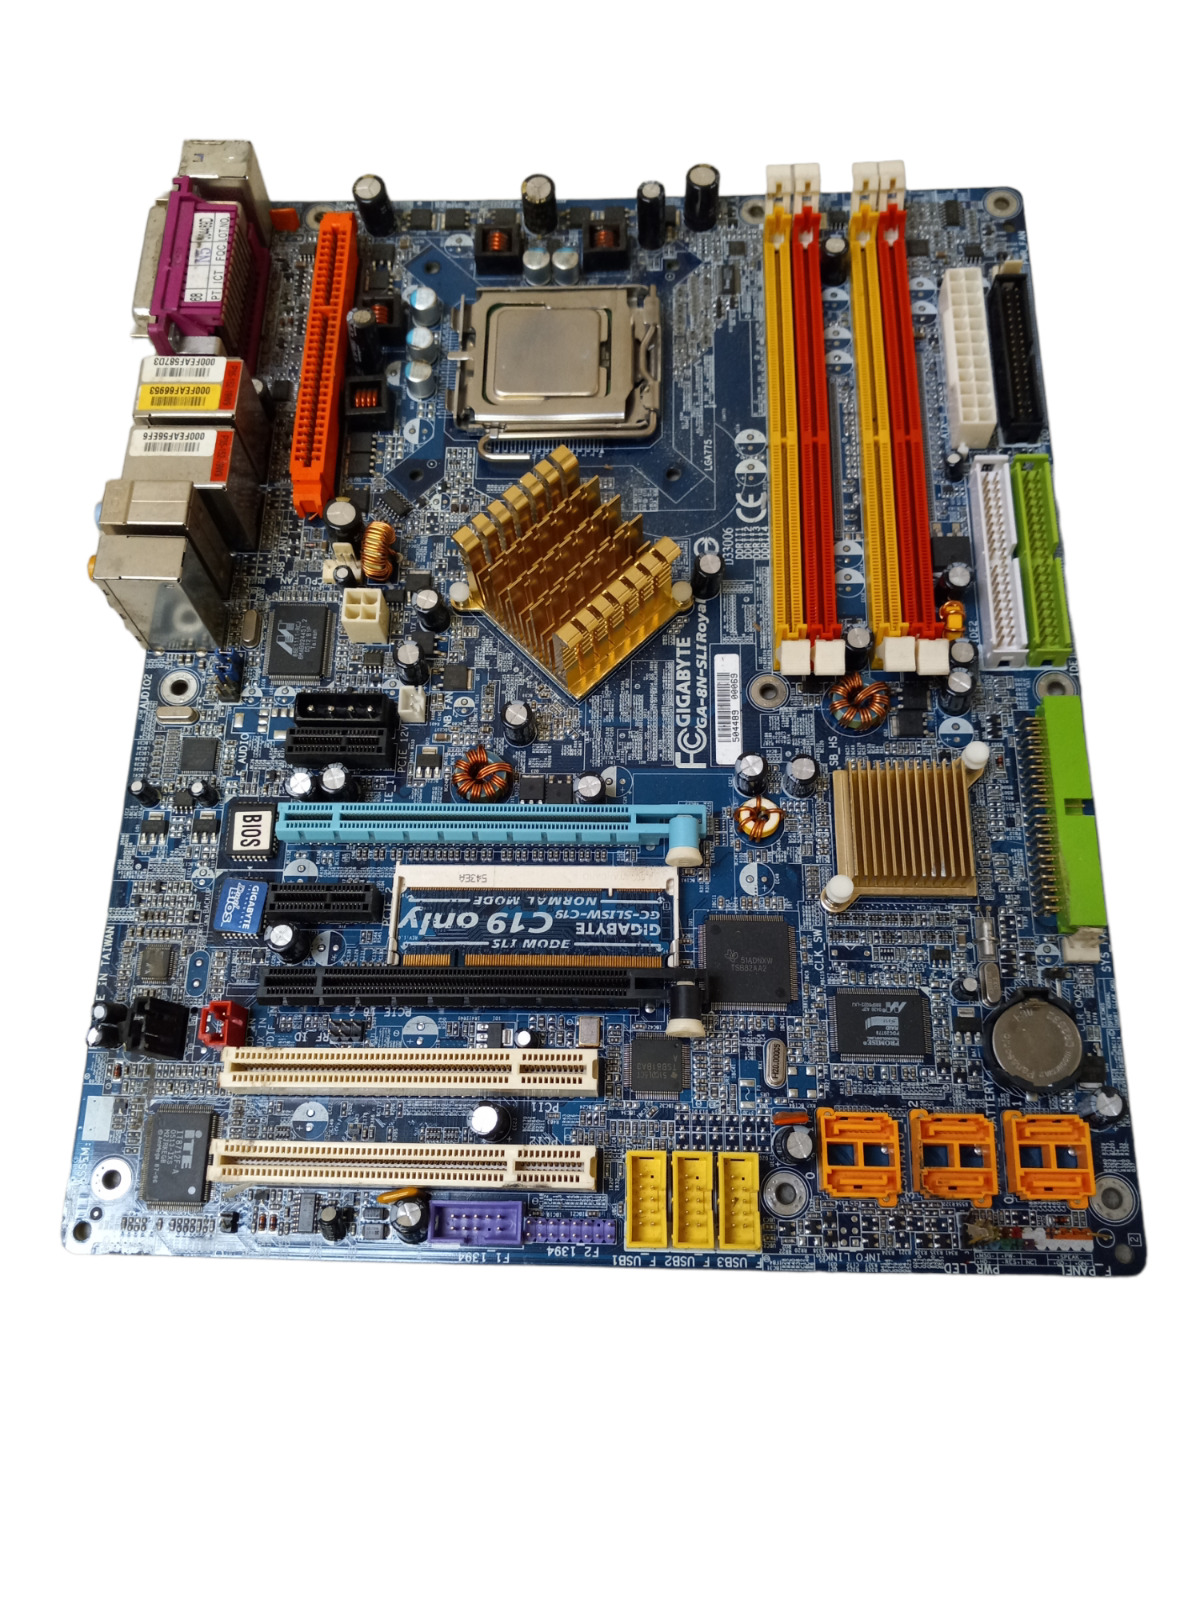 GIGABYTE GA-8N-SLI Royal LGA775 ATX Motherboard w/ Intel Pentium 4 Tested Works